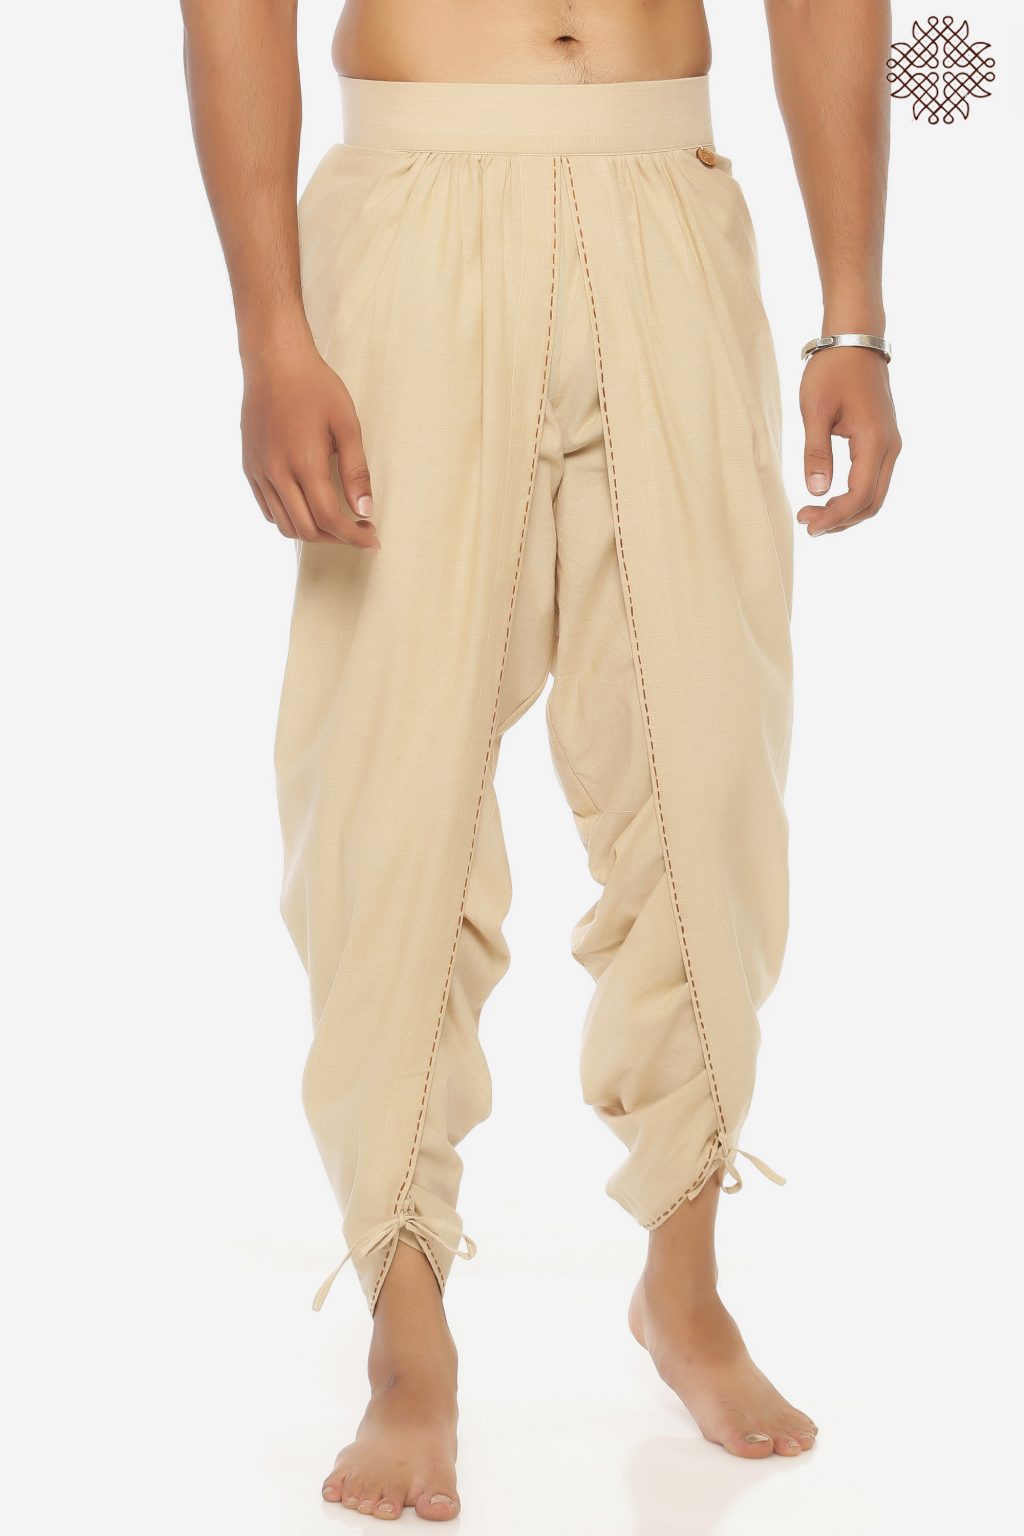 Comfortable Dhoti Pants for Men — HariNa Colour | AdiValka